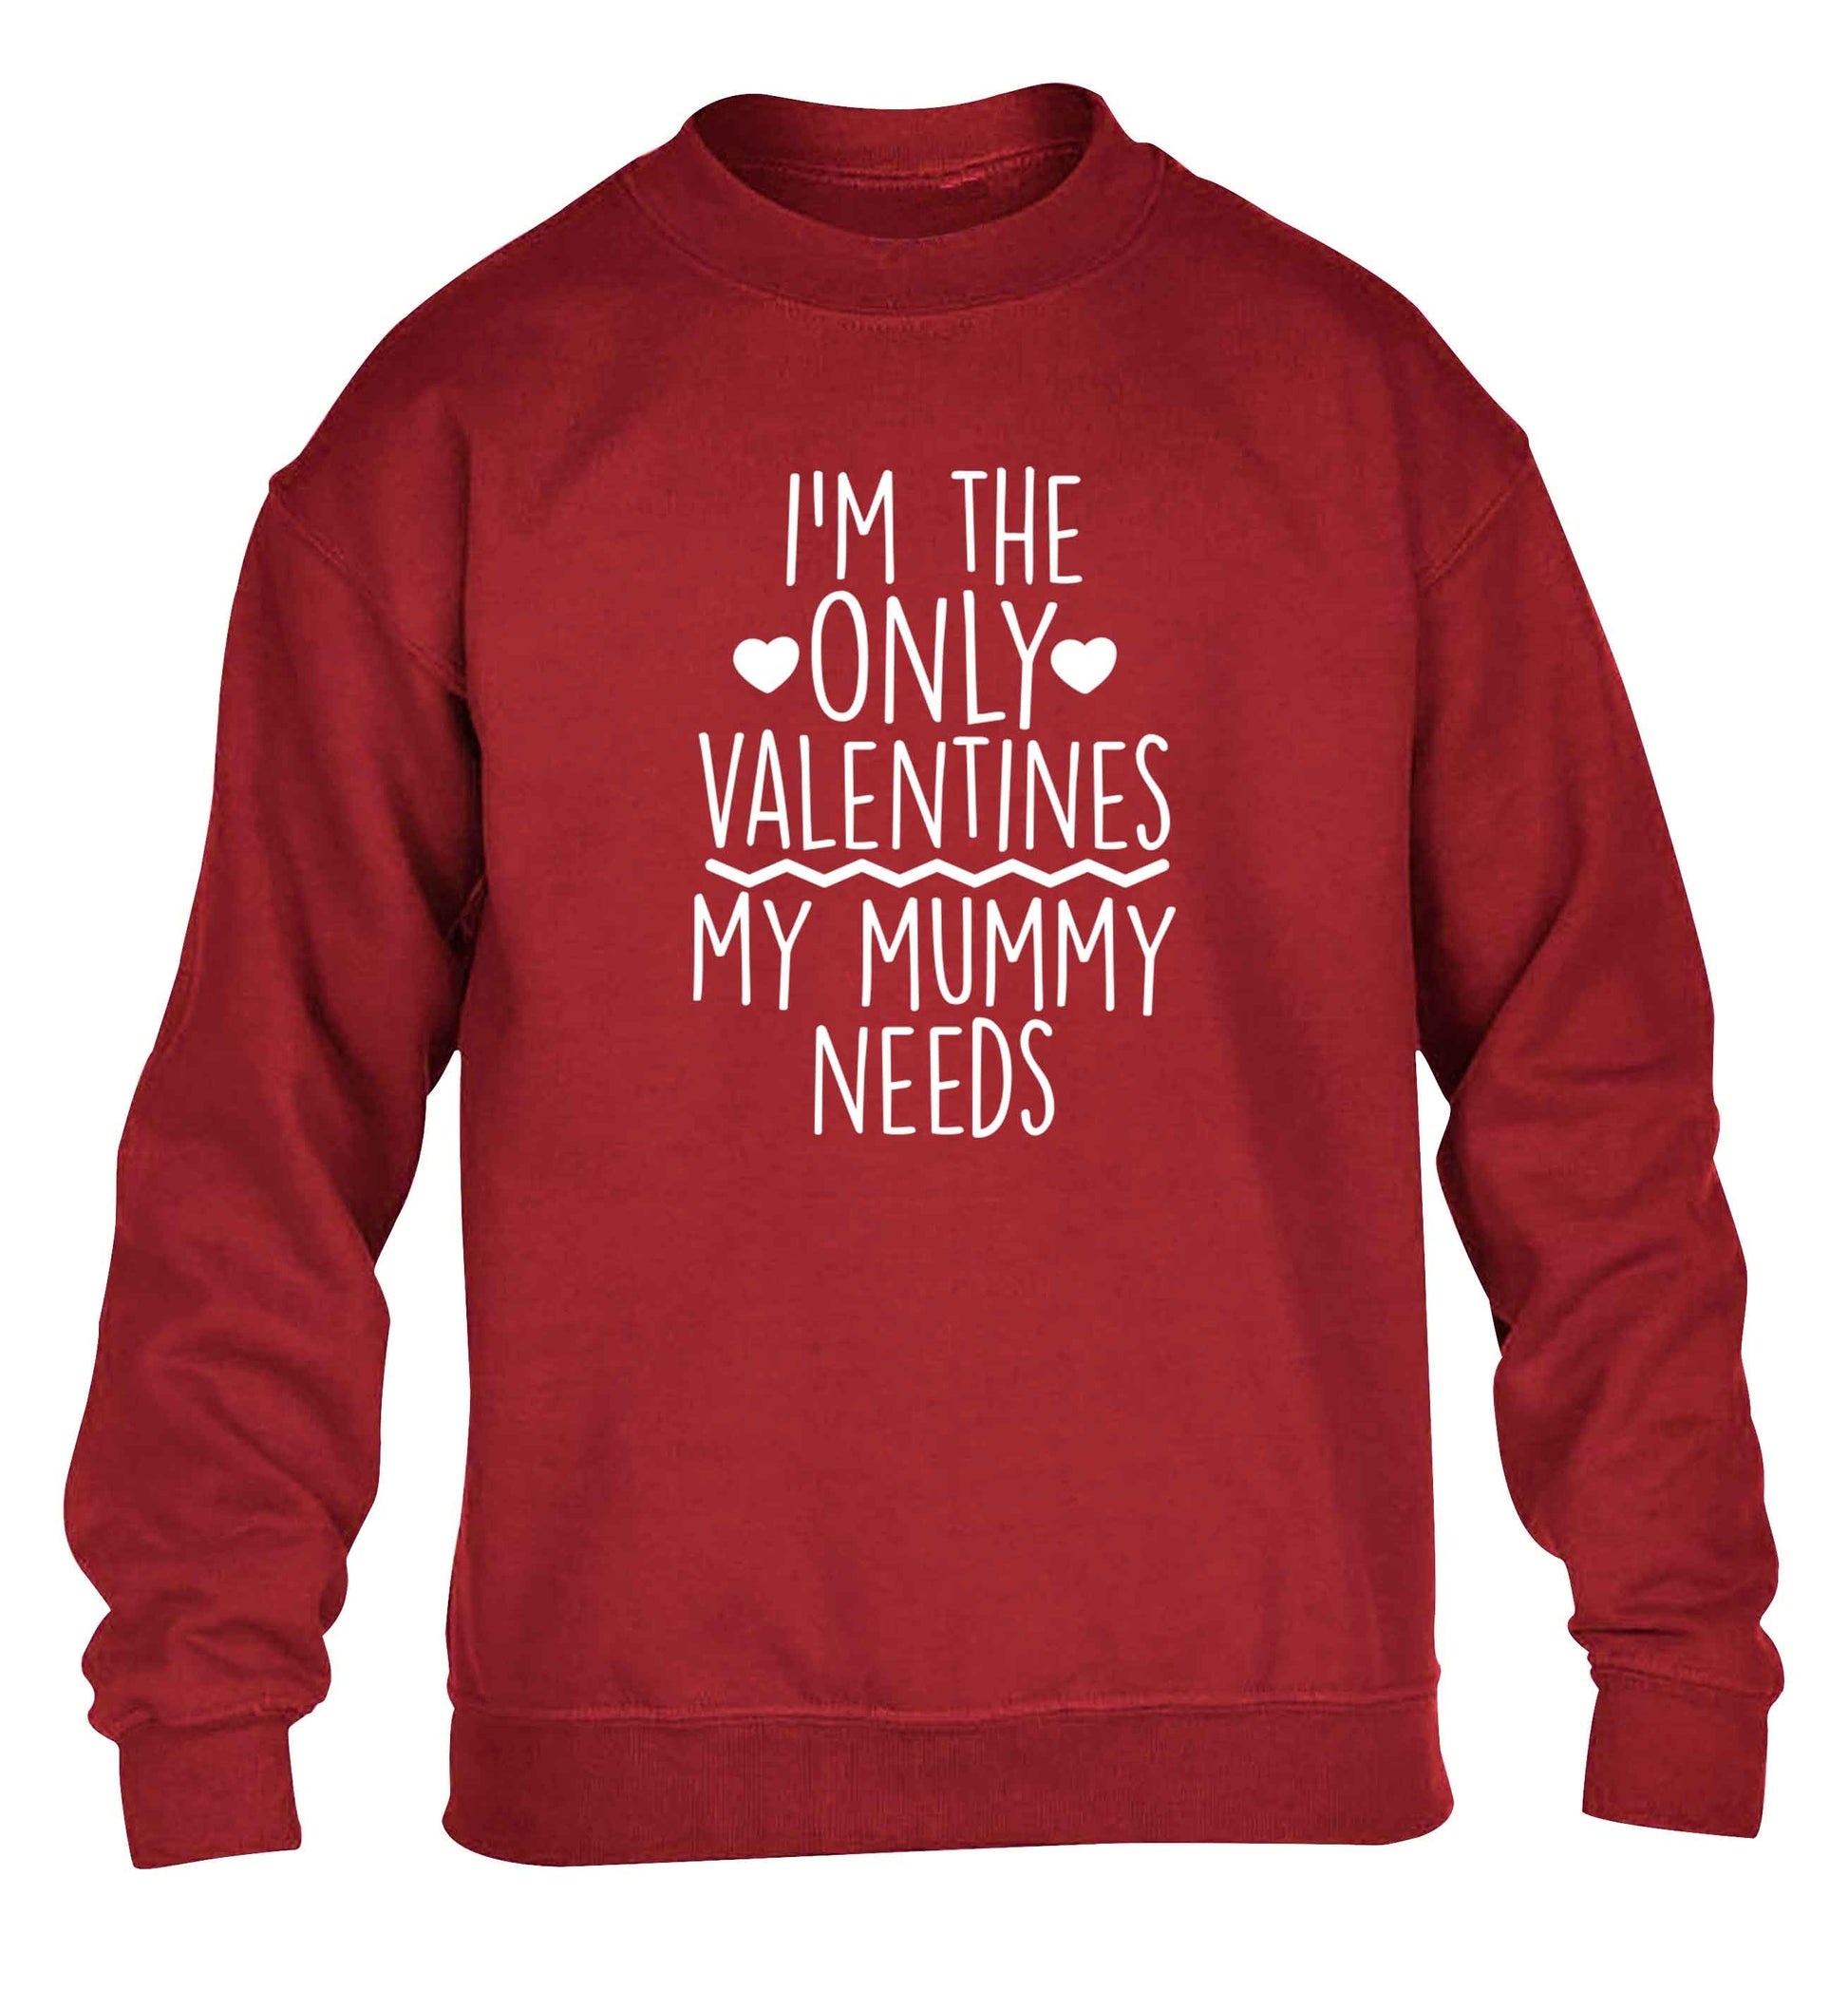 I'm the only valentines my mummy needs children's grey sweater 12-13 Years